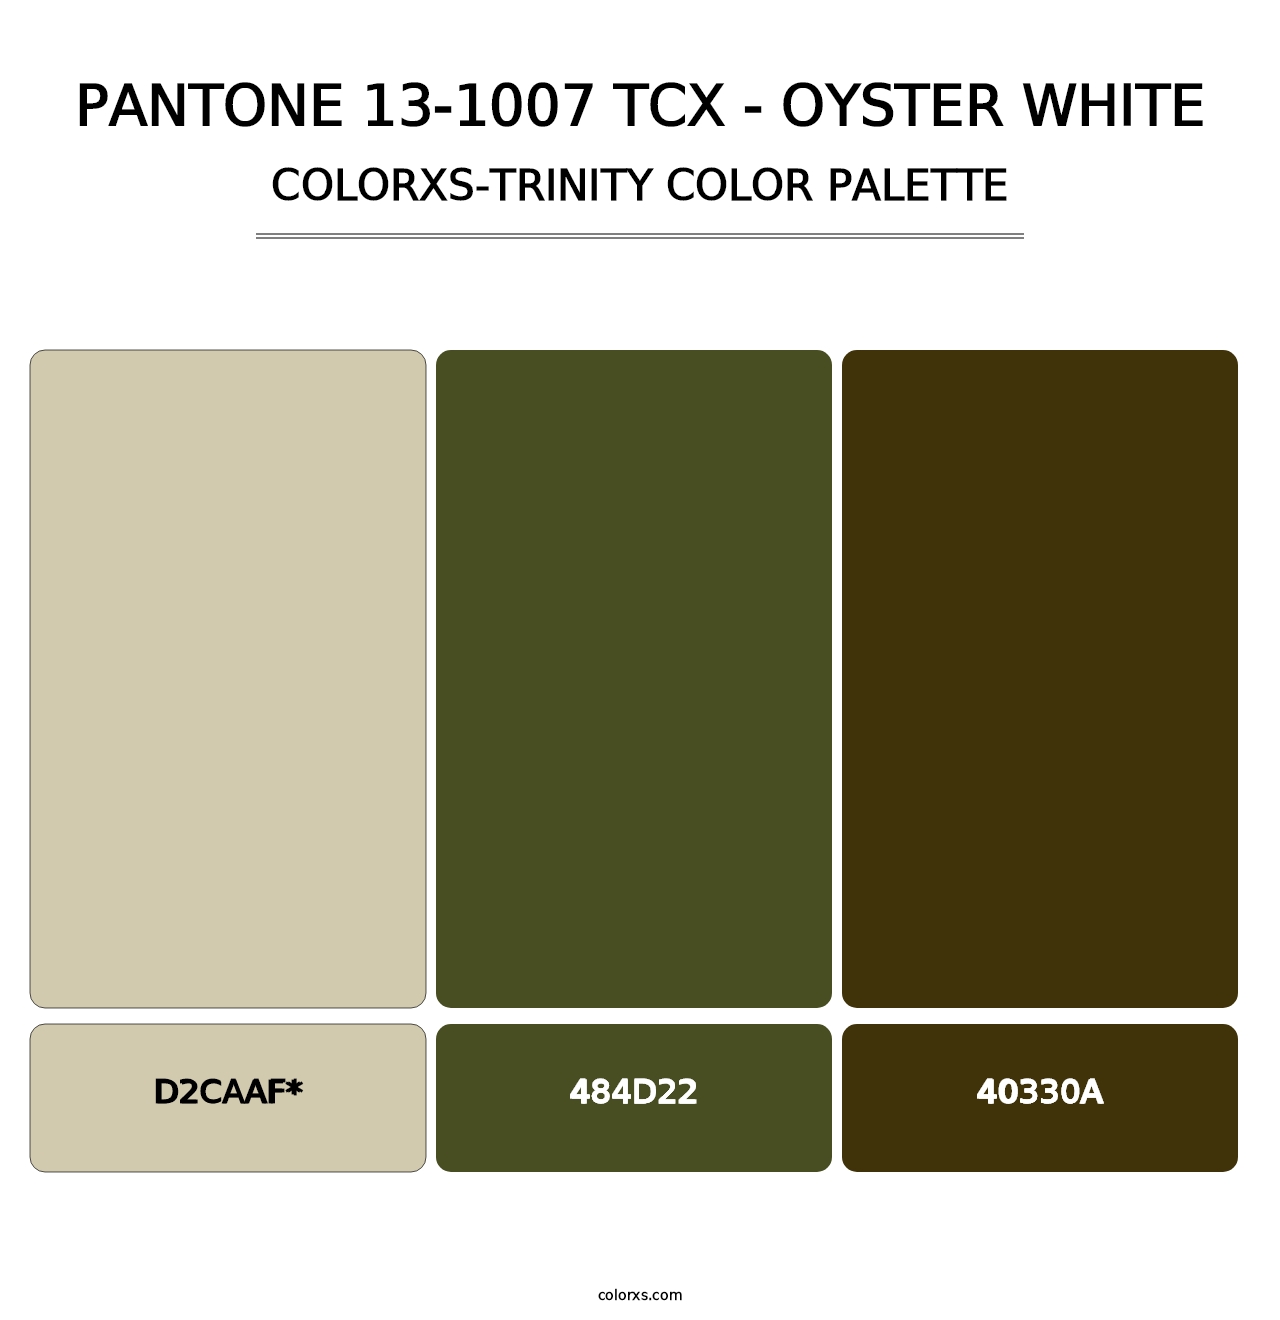 PANTONE 13-1007 TCX - Oyster White - Colorxs Trinity Palette